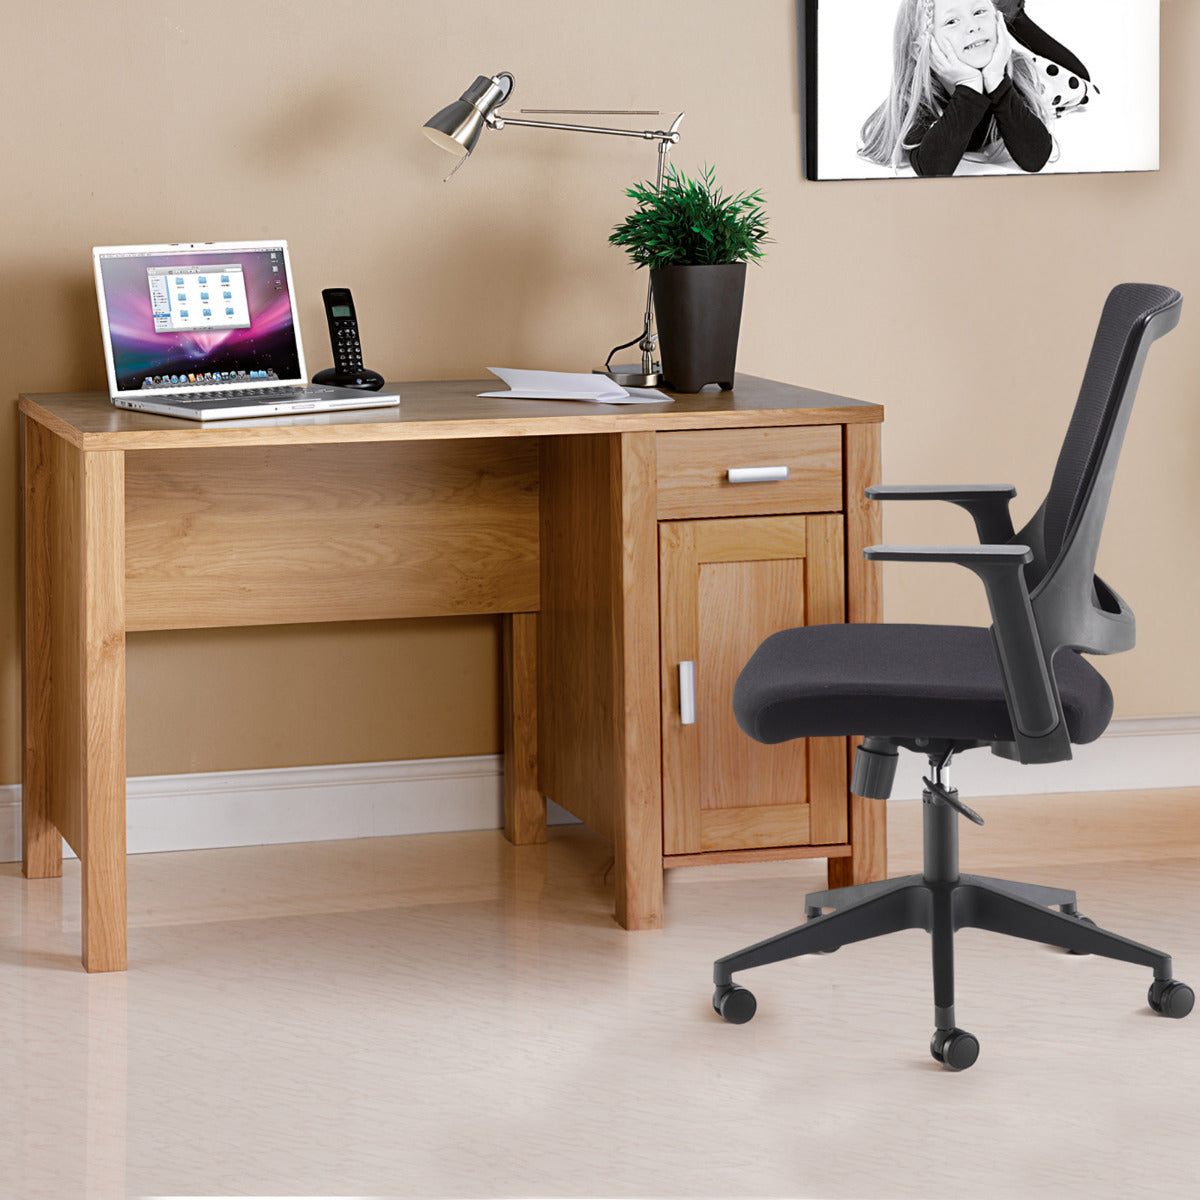 Amazon Oak Finish Home Office Desk 1.2m wide